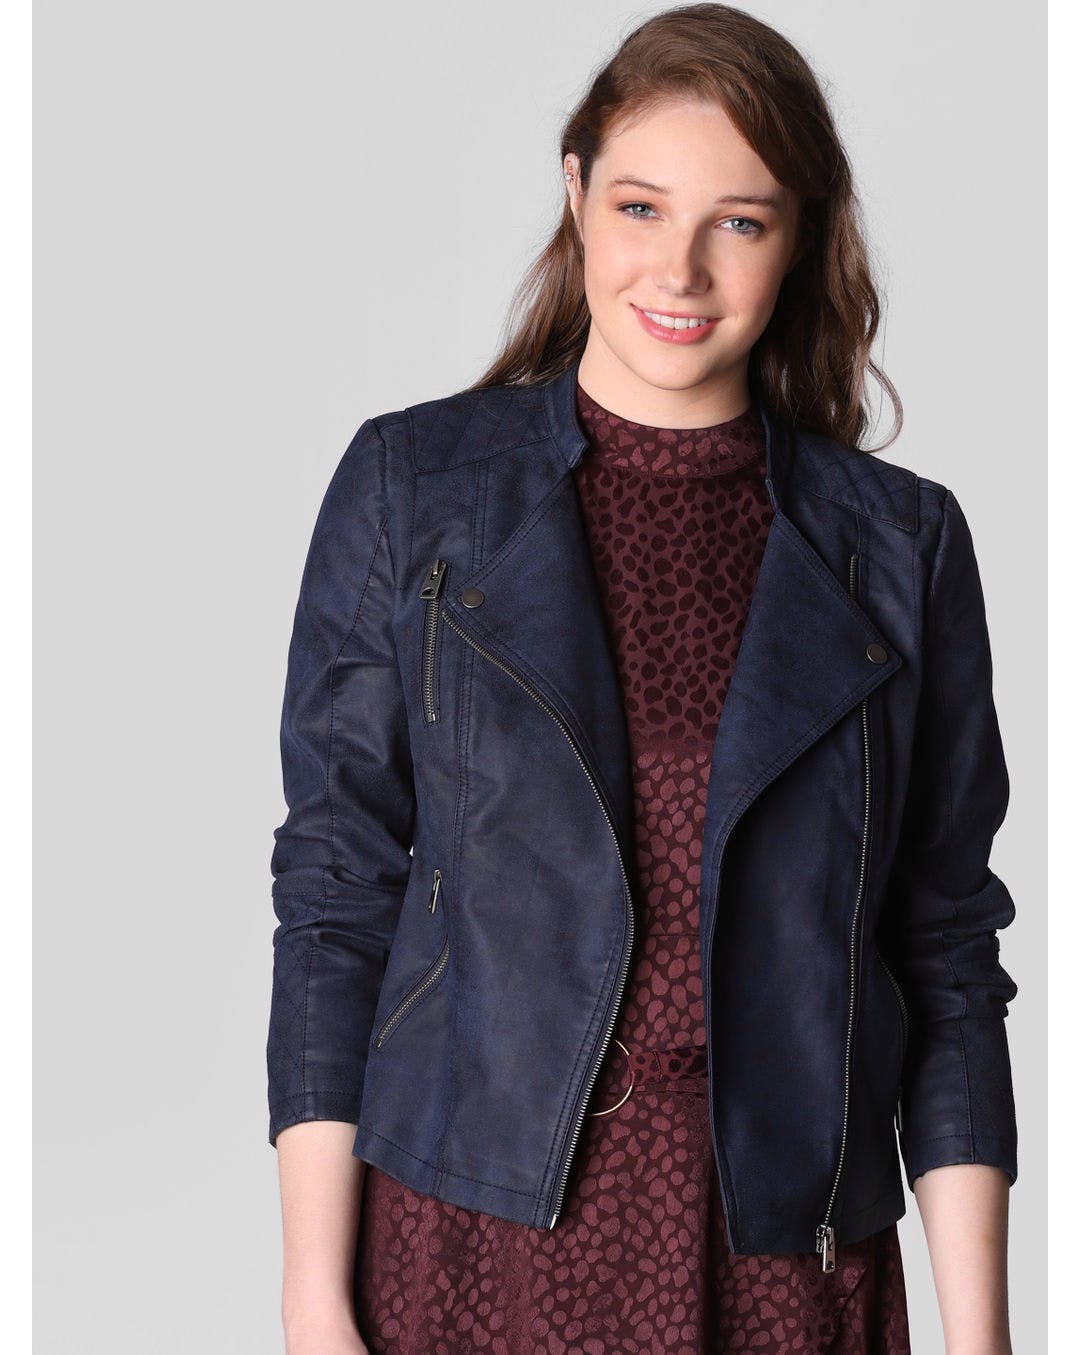 Clothing,Jacket,Leather,Leather jacket,Outerwear,Top,Blazer,Sleeve,Textile,Neck